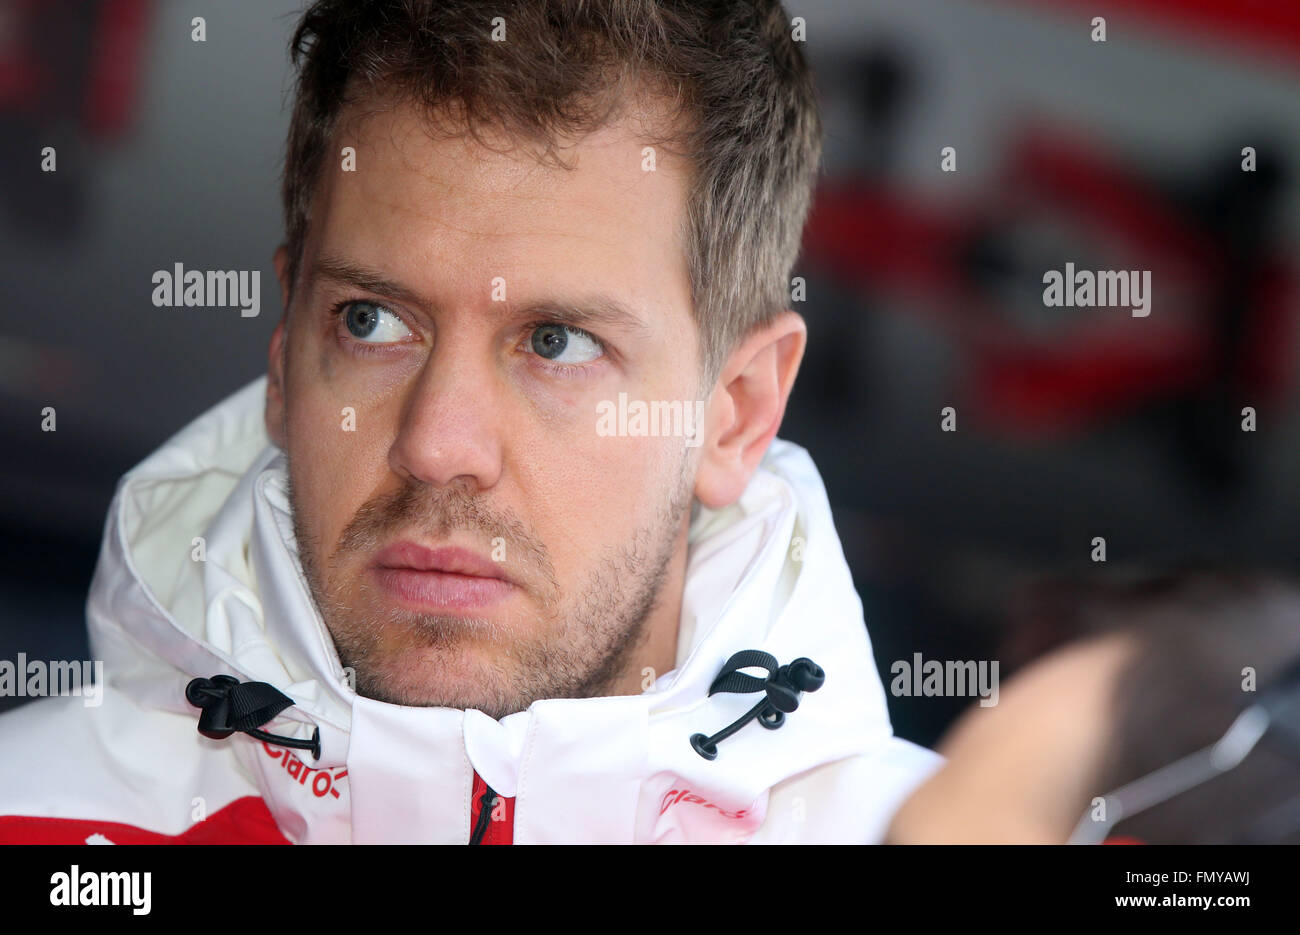 German Formula One driver Sebastian Vettel of Scuderia Ferrari is seen during the training session for the upcoming Formula One season at the Circuit de Barcelona - Catalunya in Barcelona, Spain, 22 February 2016. Photo: Jens Buettner/dpa Stock Photo